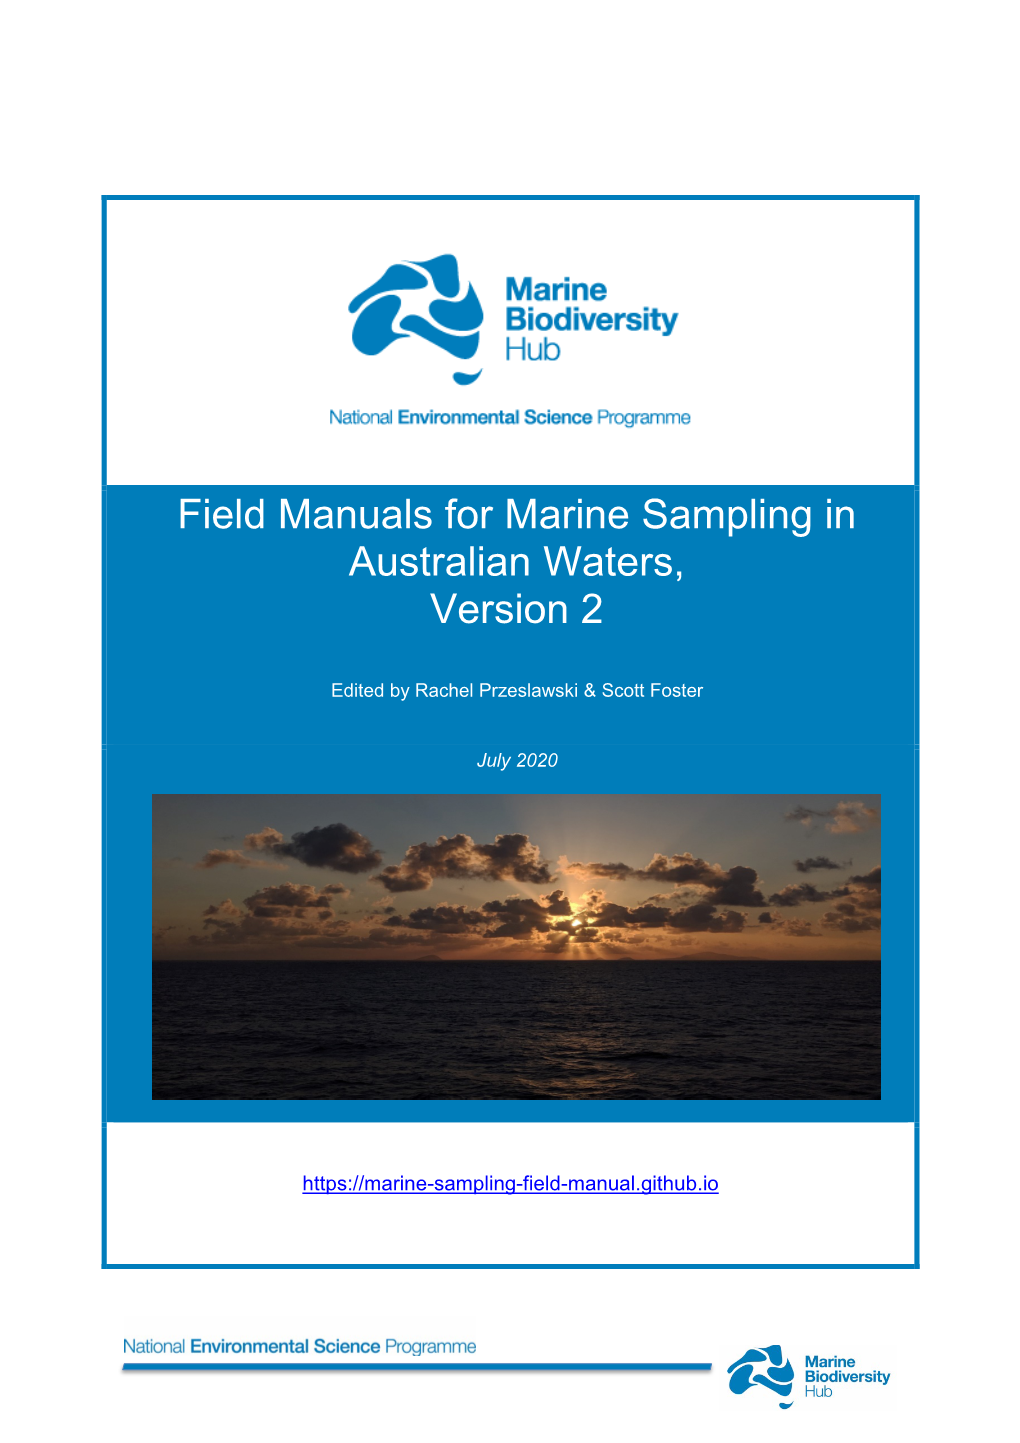 Field Manuals for Marine Sampling in Australian Waters, Version 2